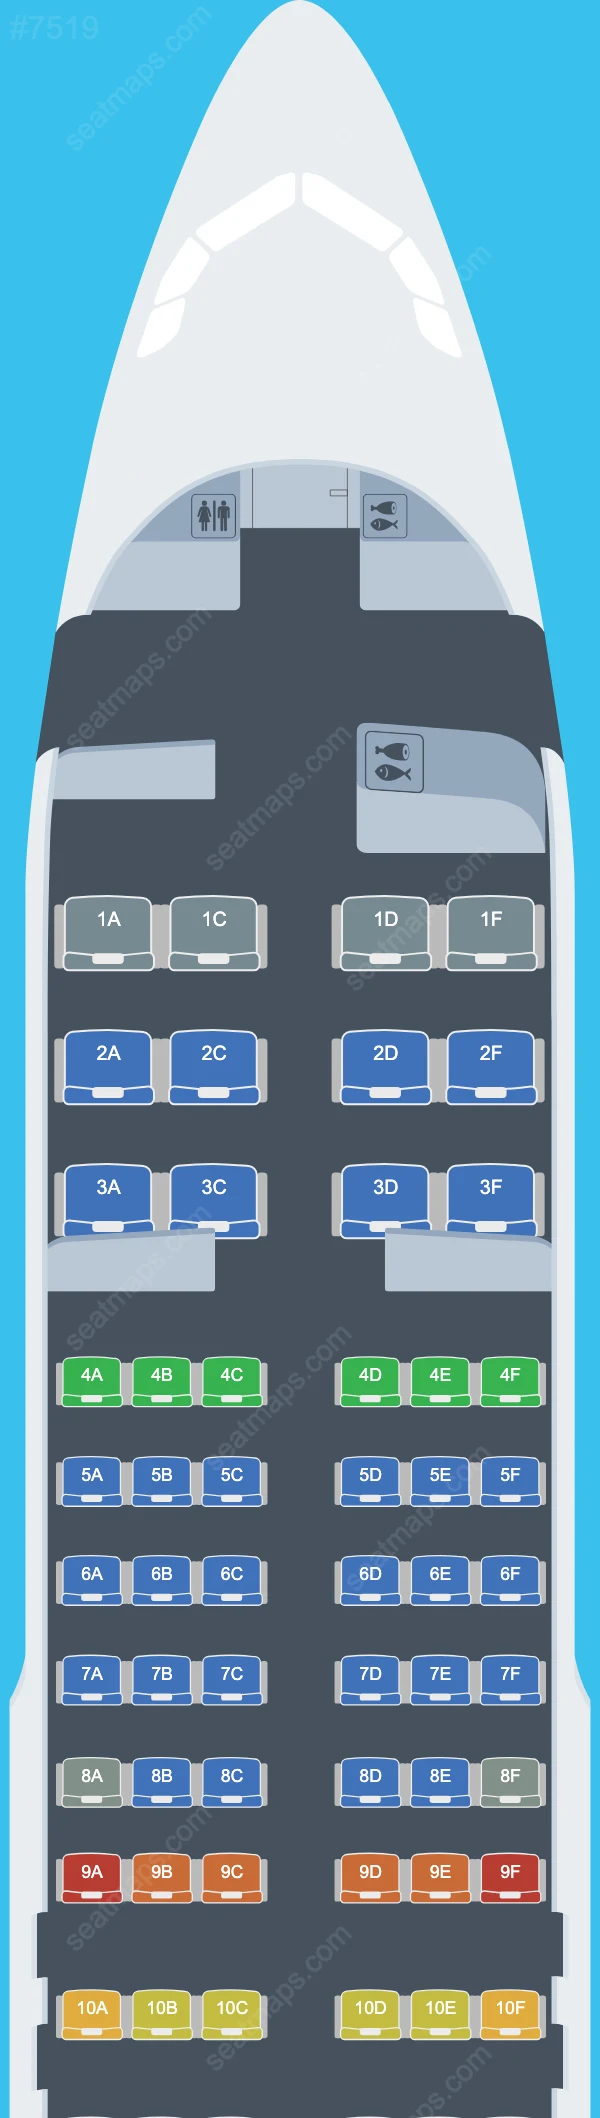 PAL Express Airbus A320 Seat Maps A320-200 V.3